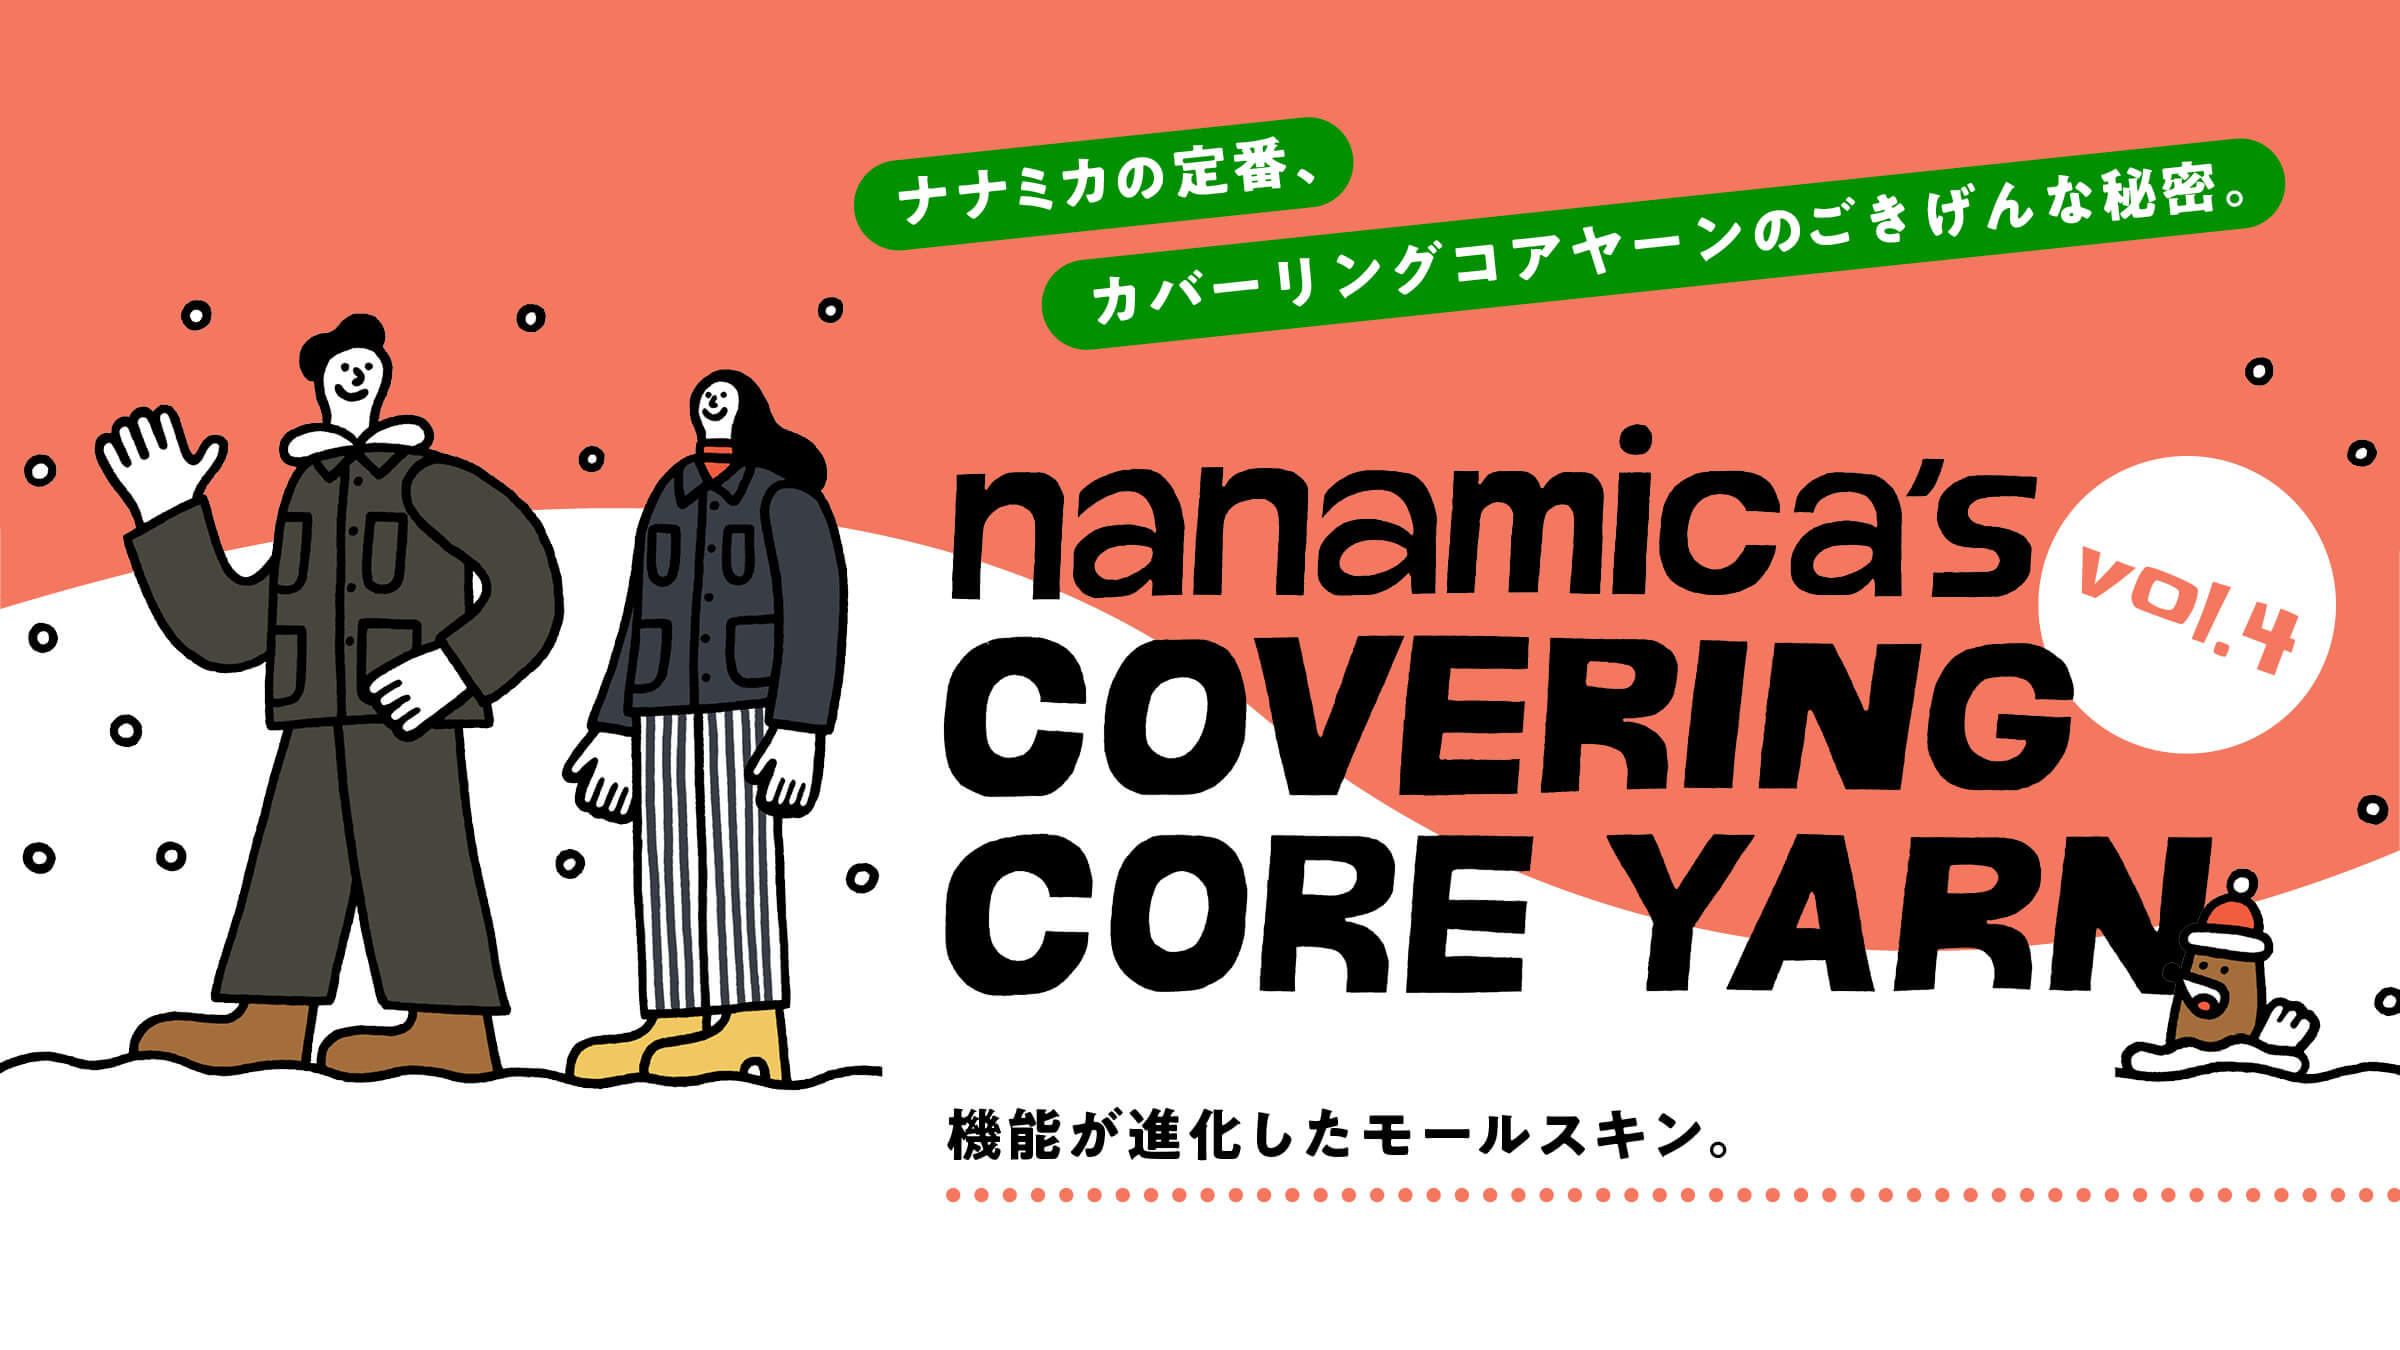 nanamica’s COVERING CORE YARN ナナミカの定番、カバーリングコアヤーンのごきげんな秘密。vol.4 機能が進化したモールスキン。